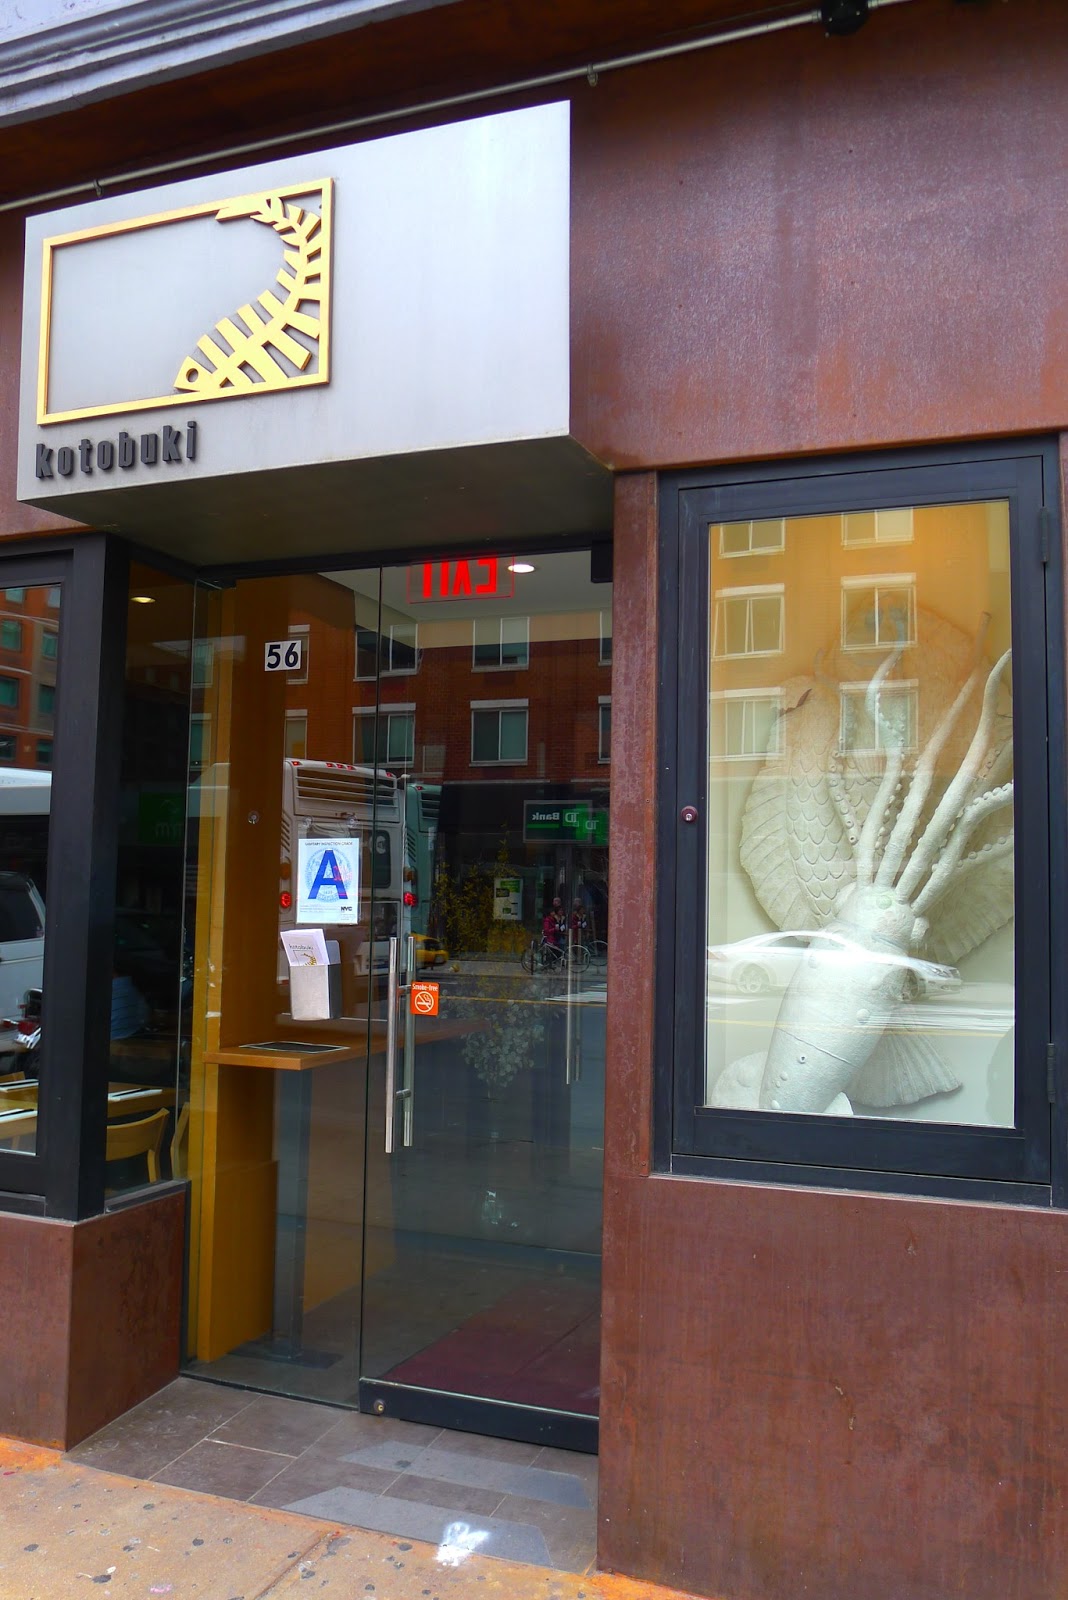 Photo of Kotobuki in New York City, New York, United States - 1 Picture of Restaurant, Food, Point of interest, Establishment